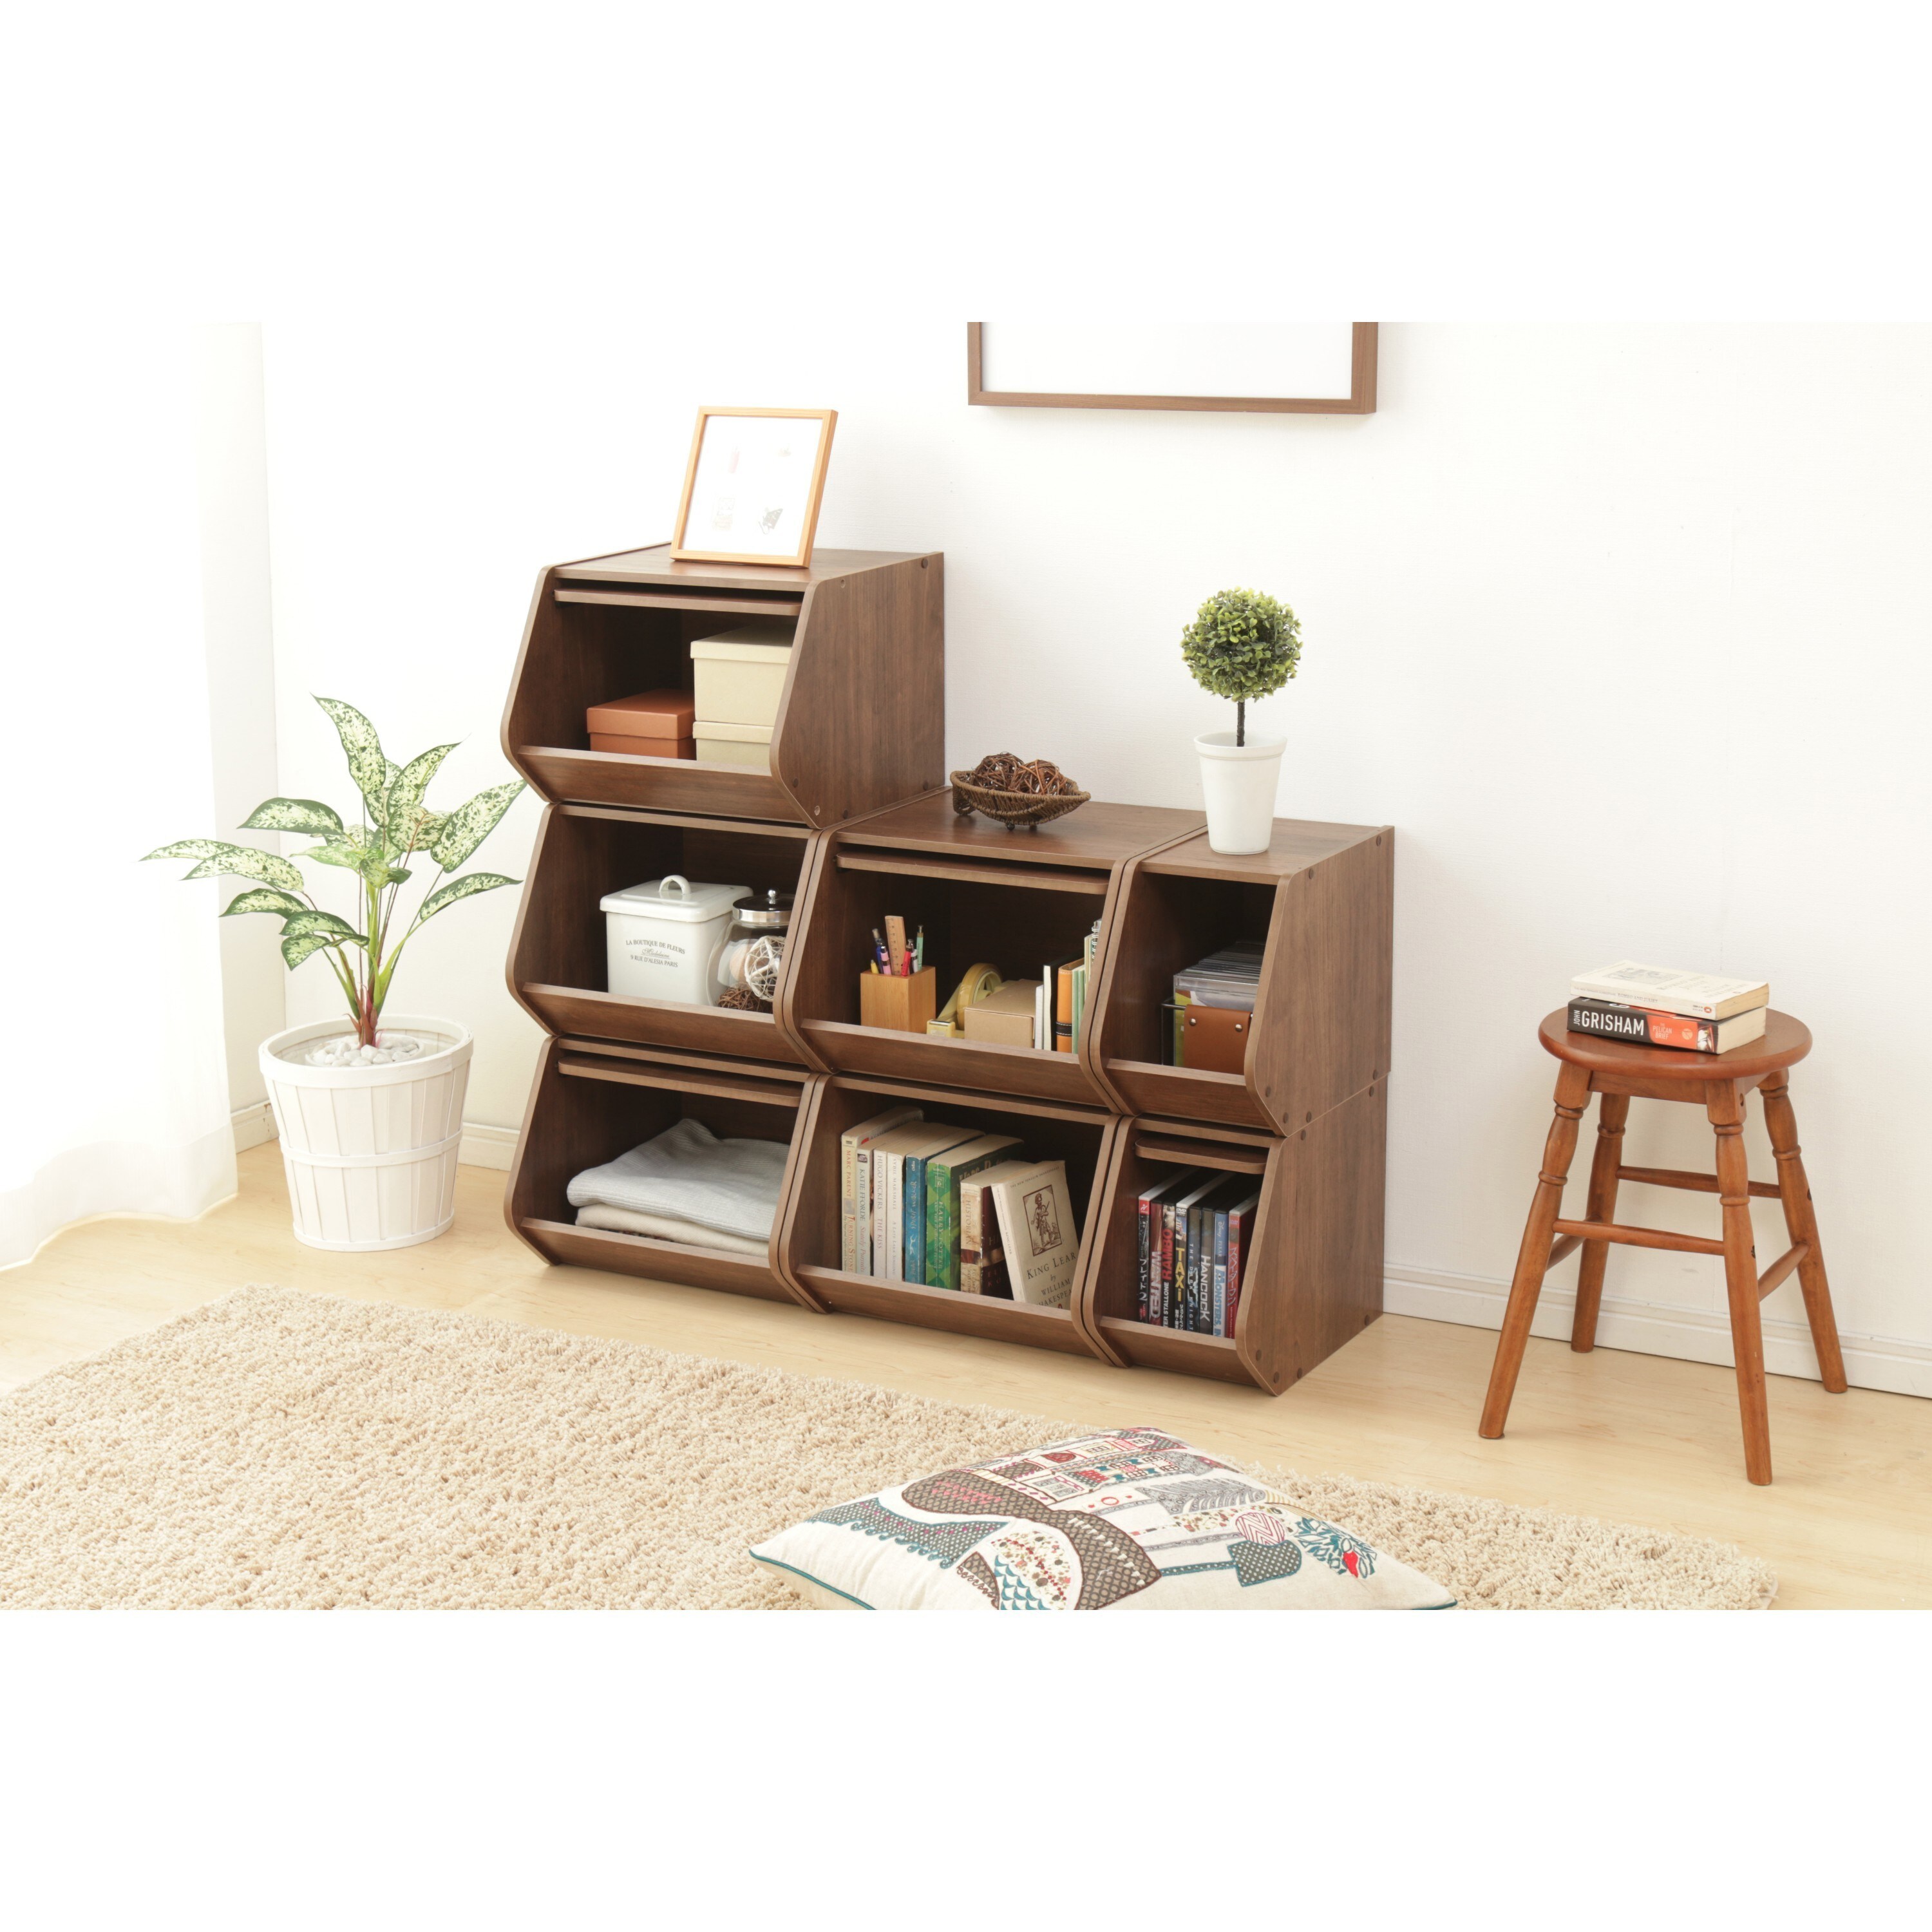  IRIS TACHI Modular Wood Stacking Storage Box with Shelf, Dark  Brown : Home & Kitchen